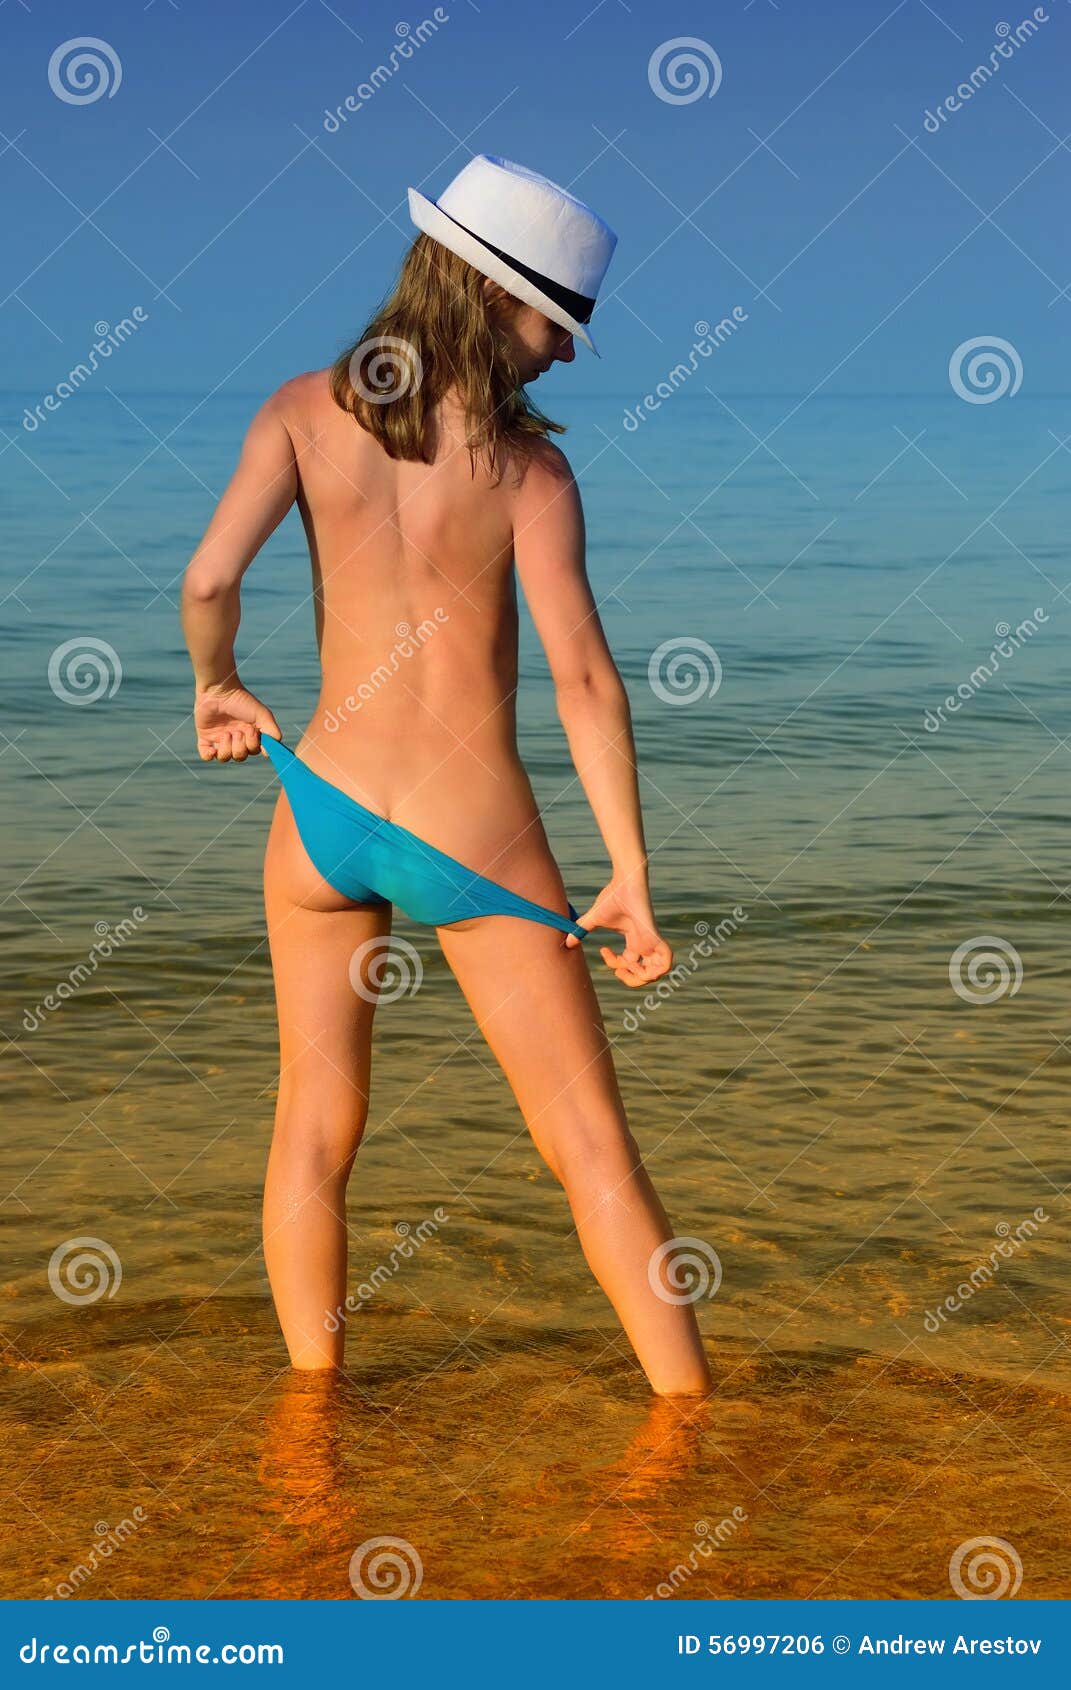 dallas weaver recommends russian nude beach girls pic